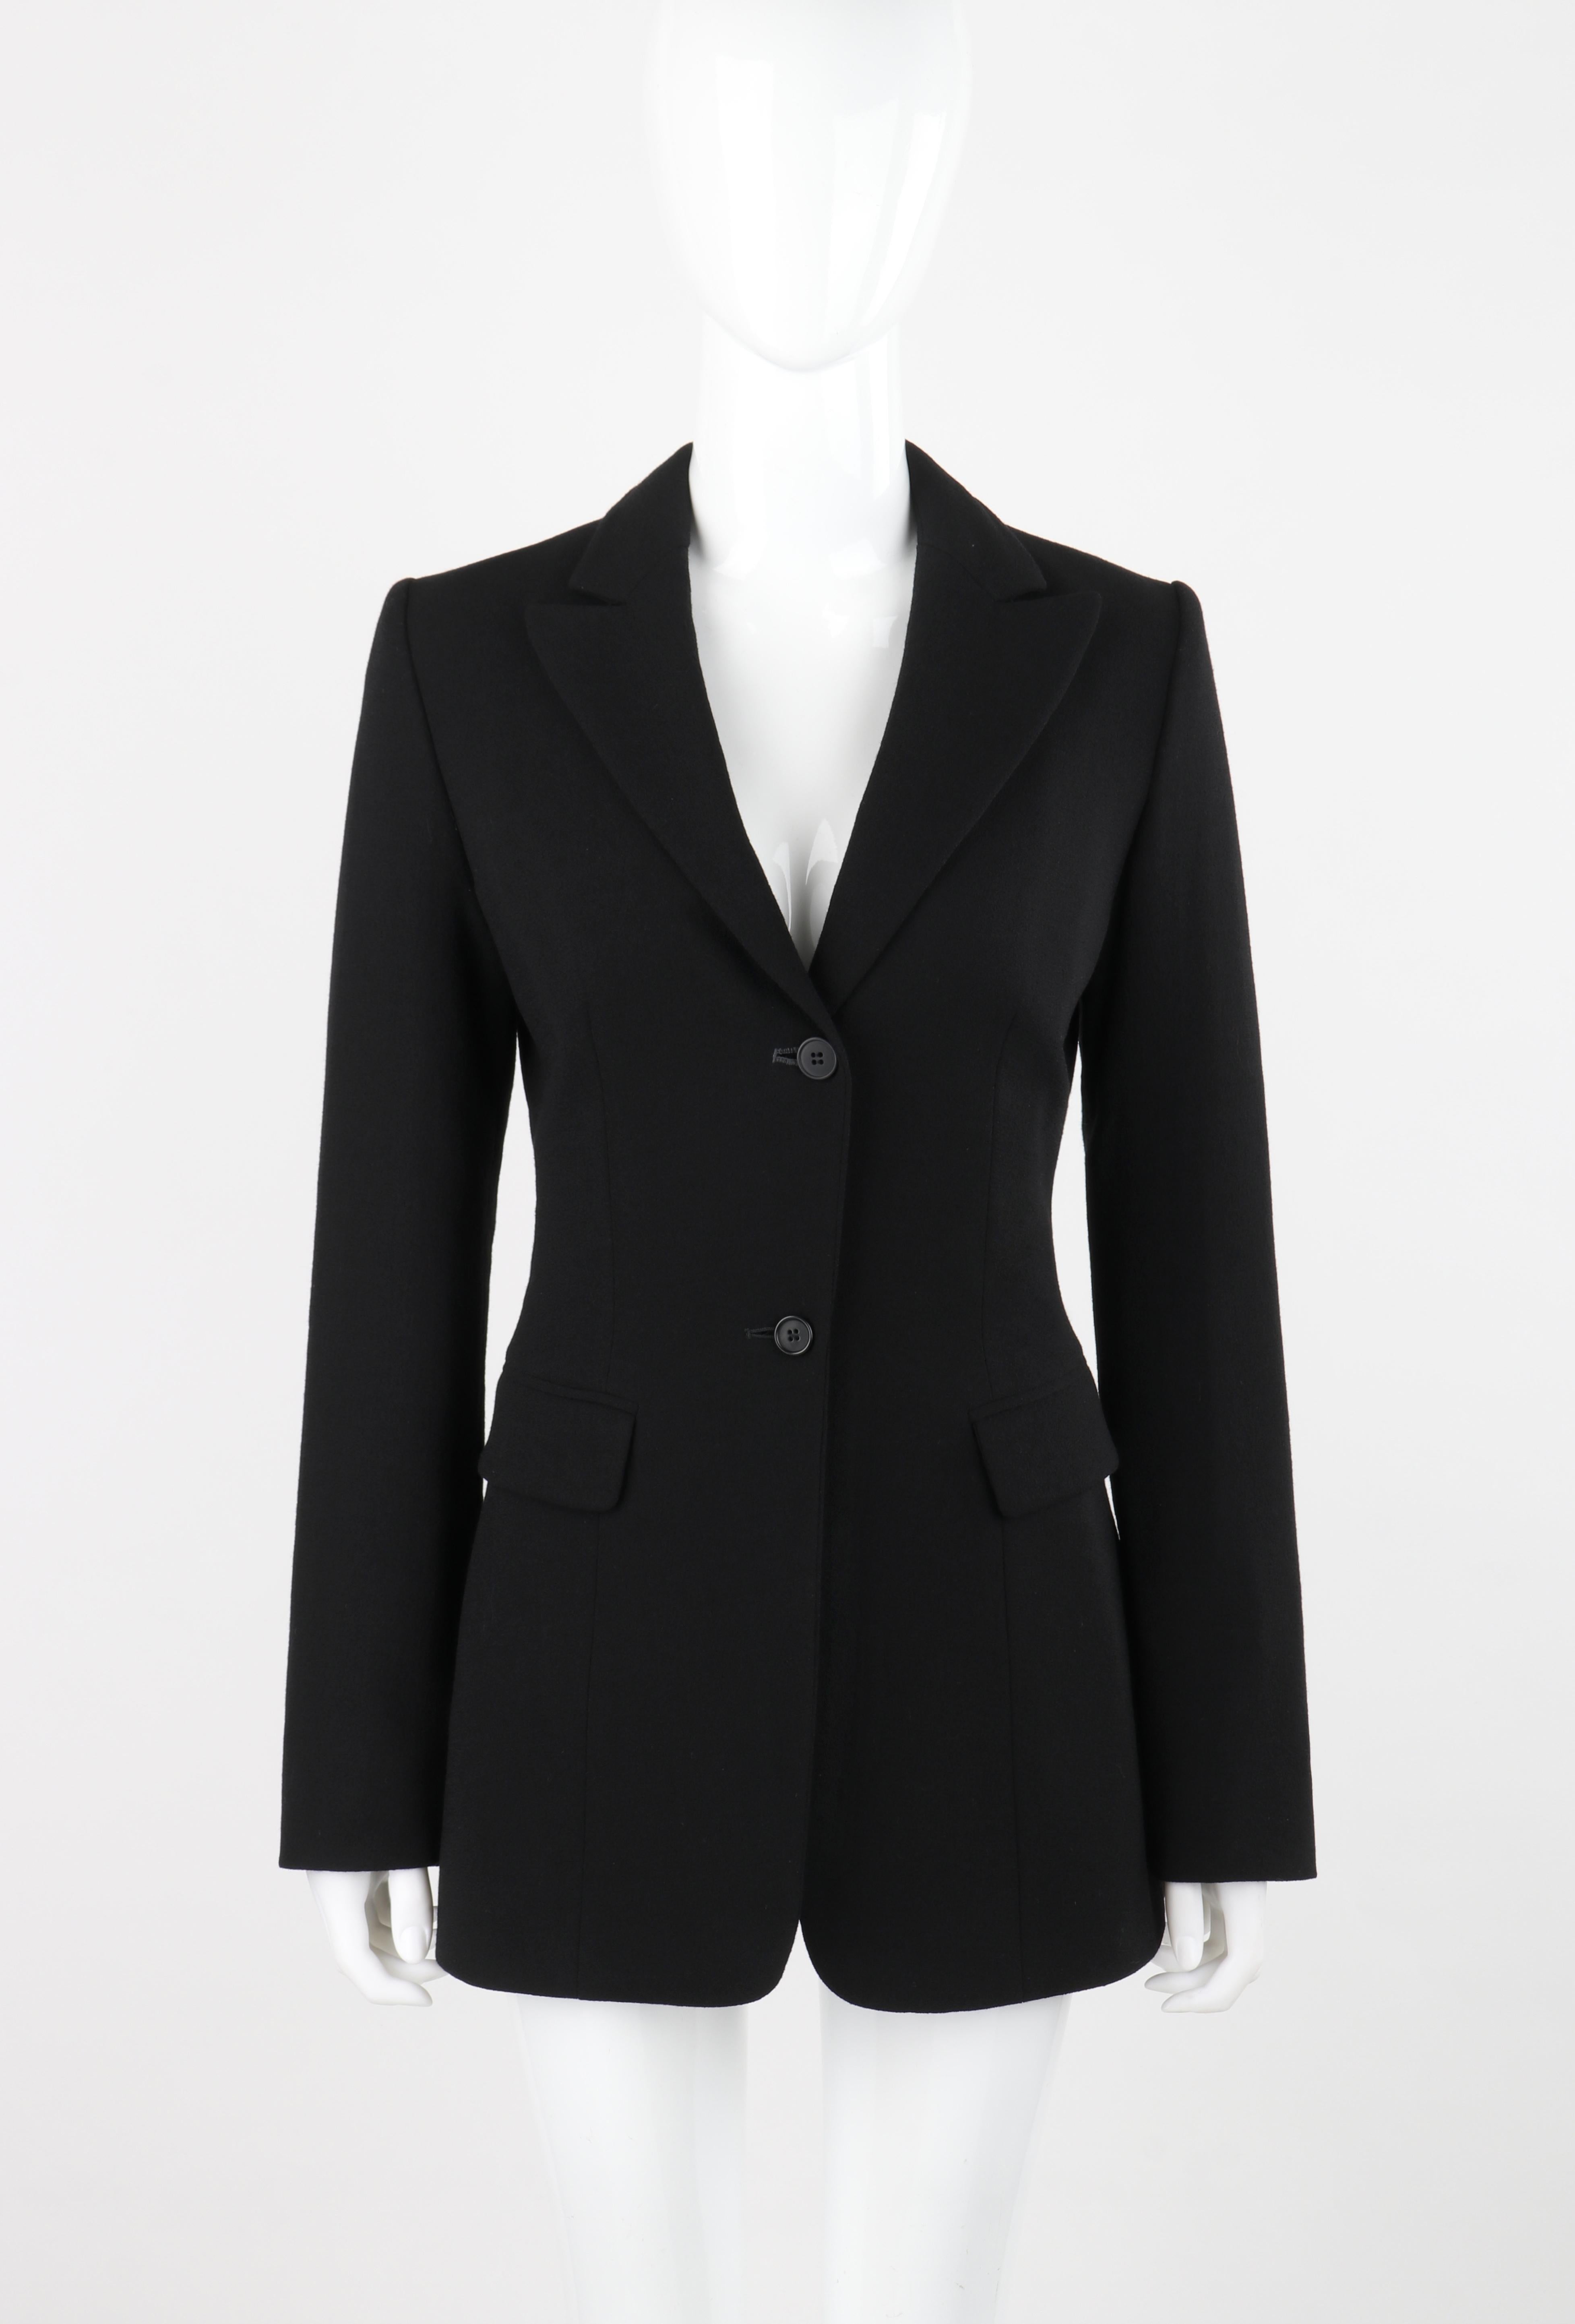 Women's OWEN GASTER c.1990's Vtg Black Wool Structured Zip Open Back Blazer Jacket RARE For Sale